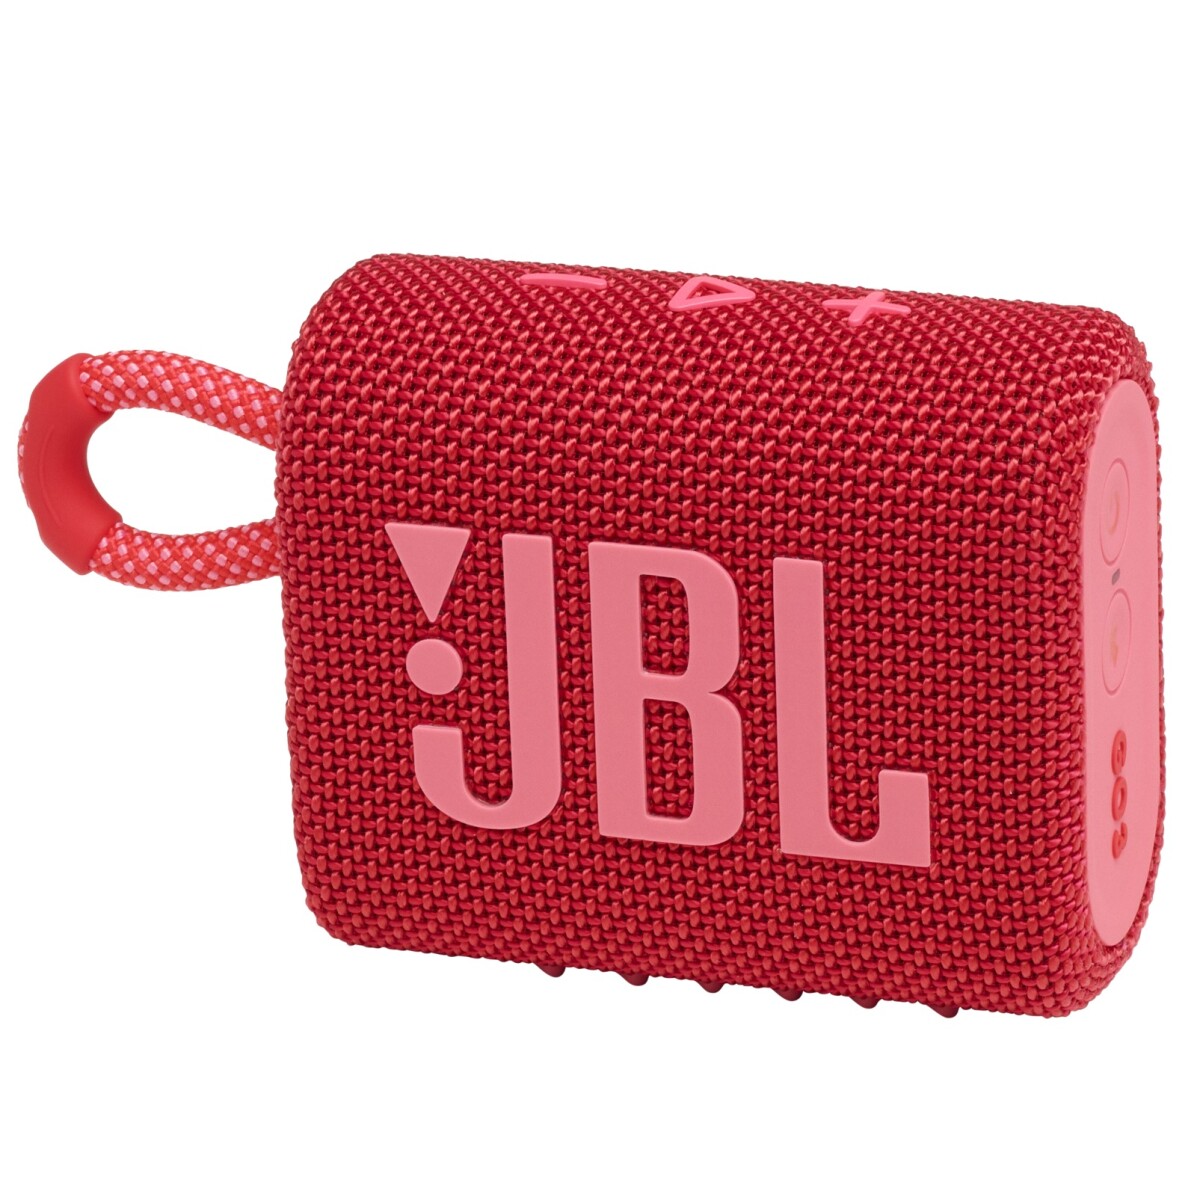 JBL GO 3 PORTABLE BLUETHOOTH SPEAKER,5 HOURS BATTERY & WATERPROOF (RED) - 001 